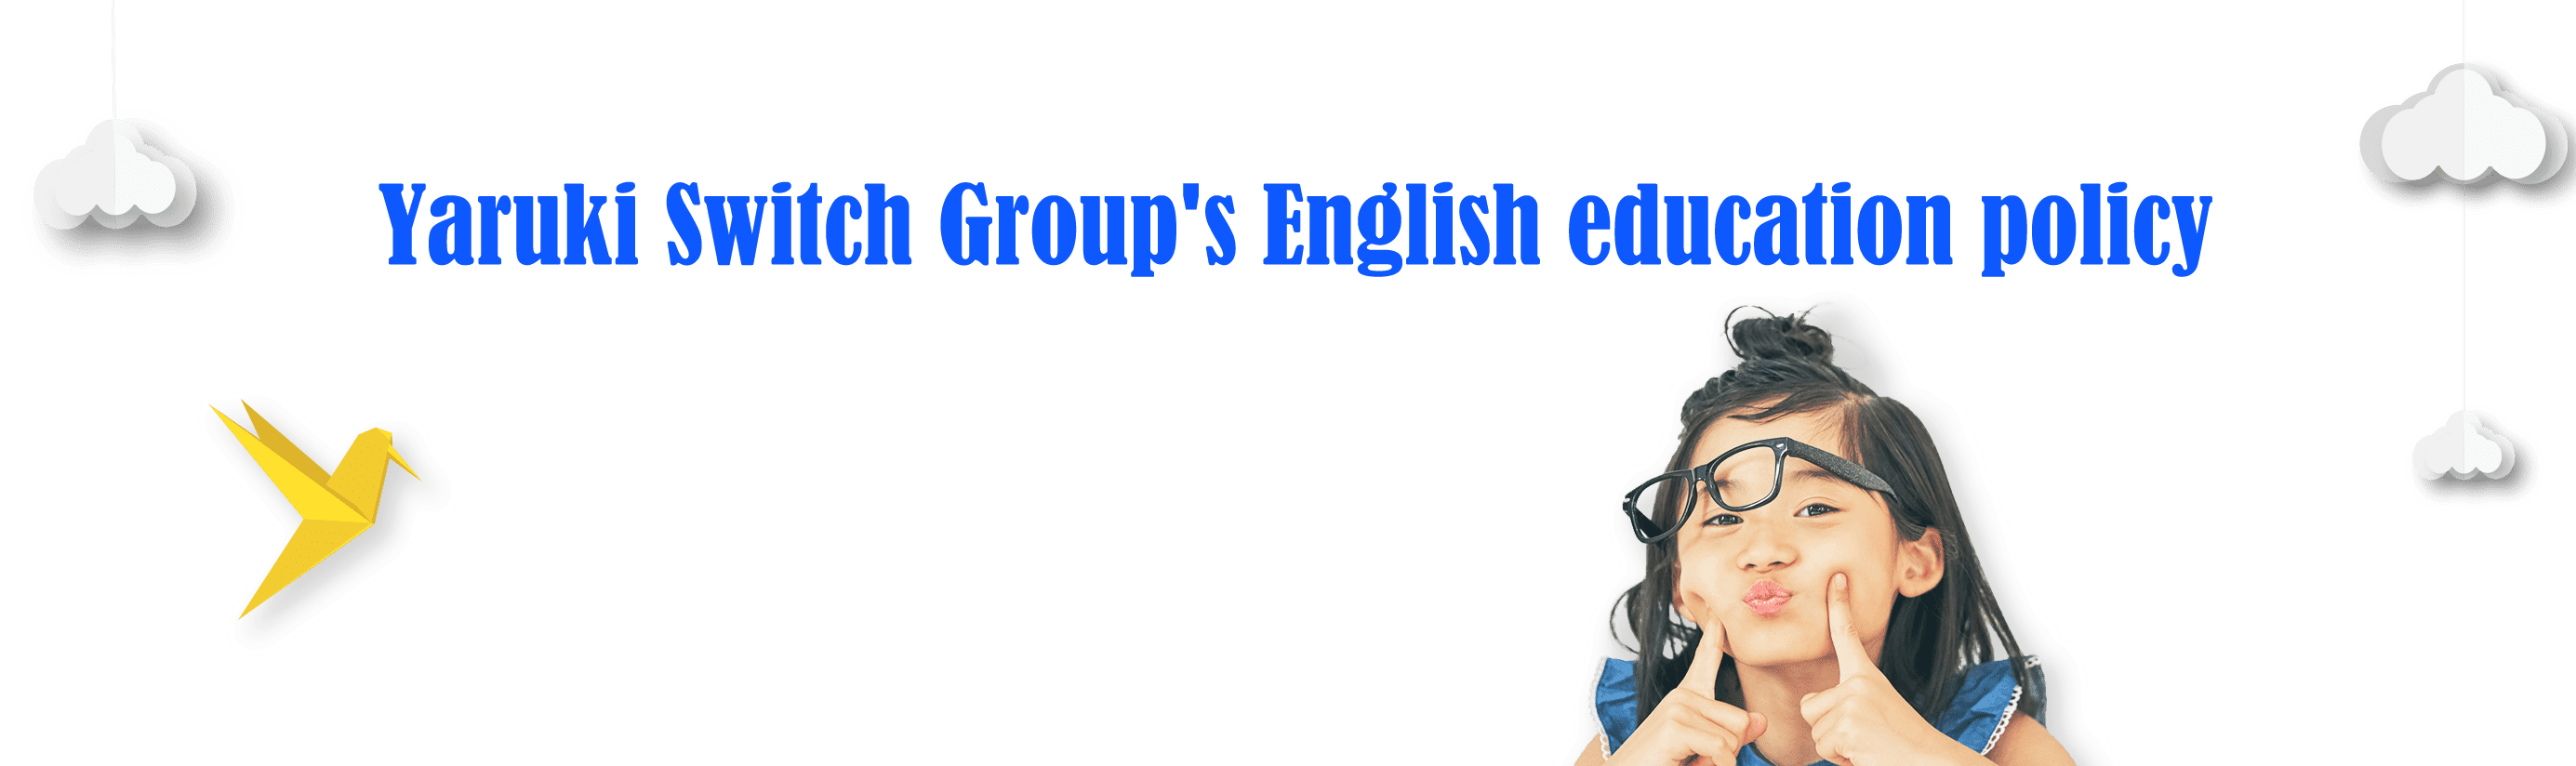 Yaruki Switch Group's English education policy